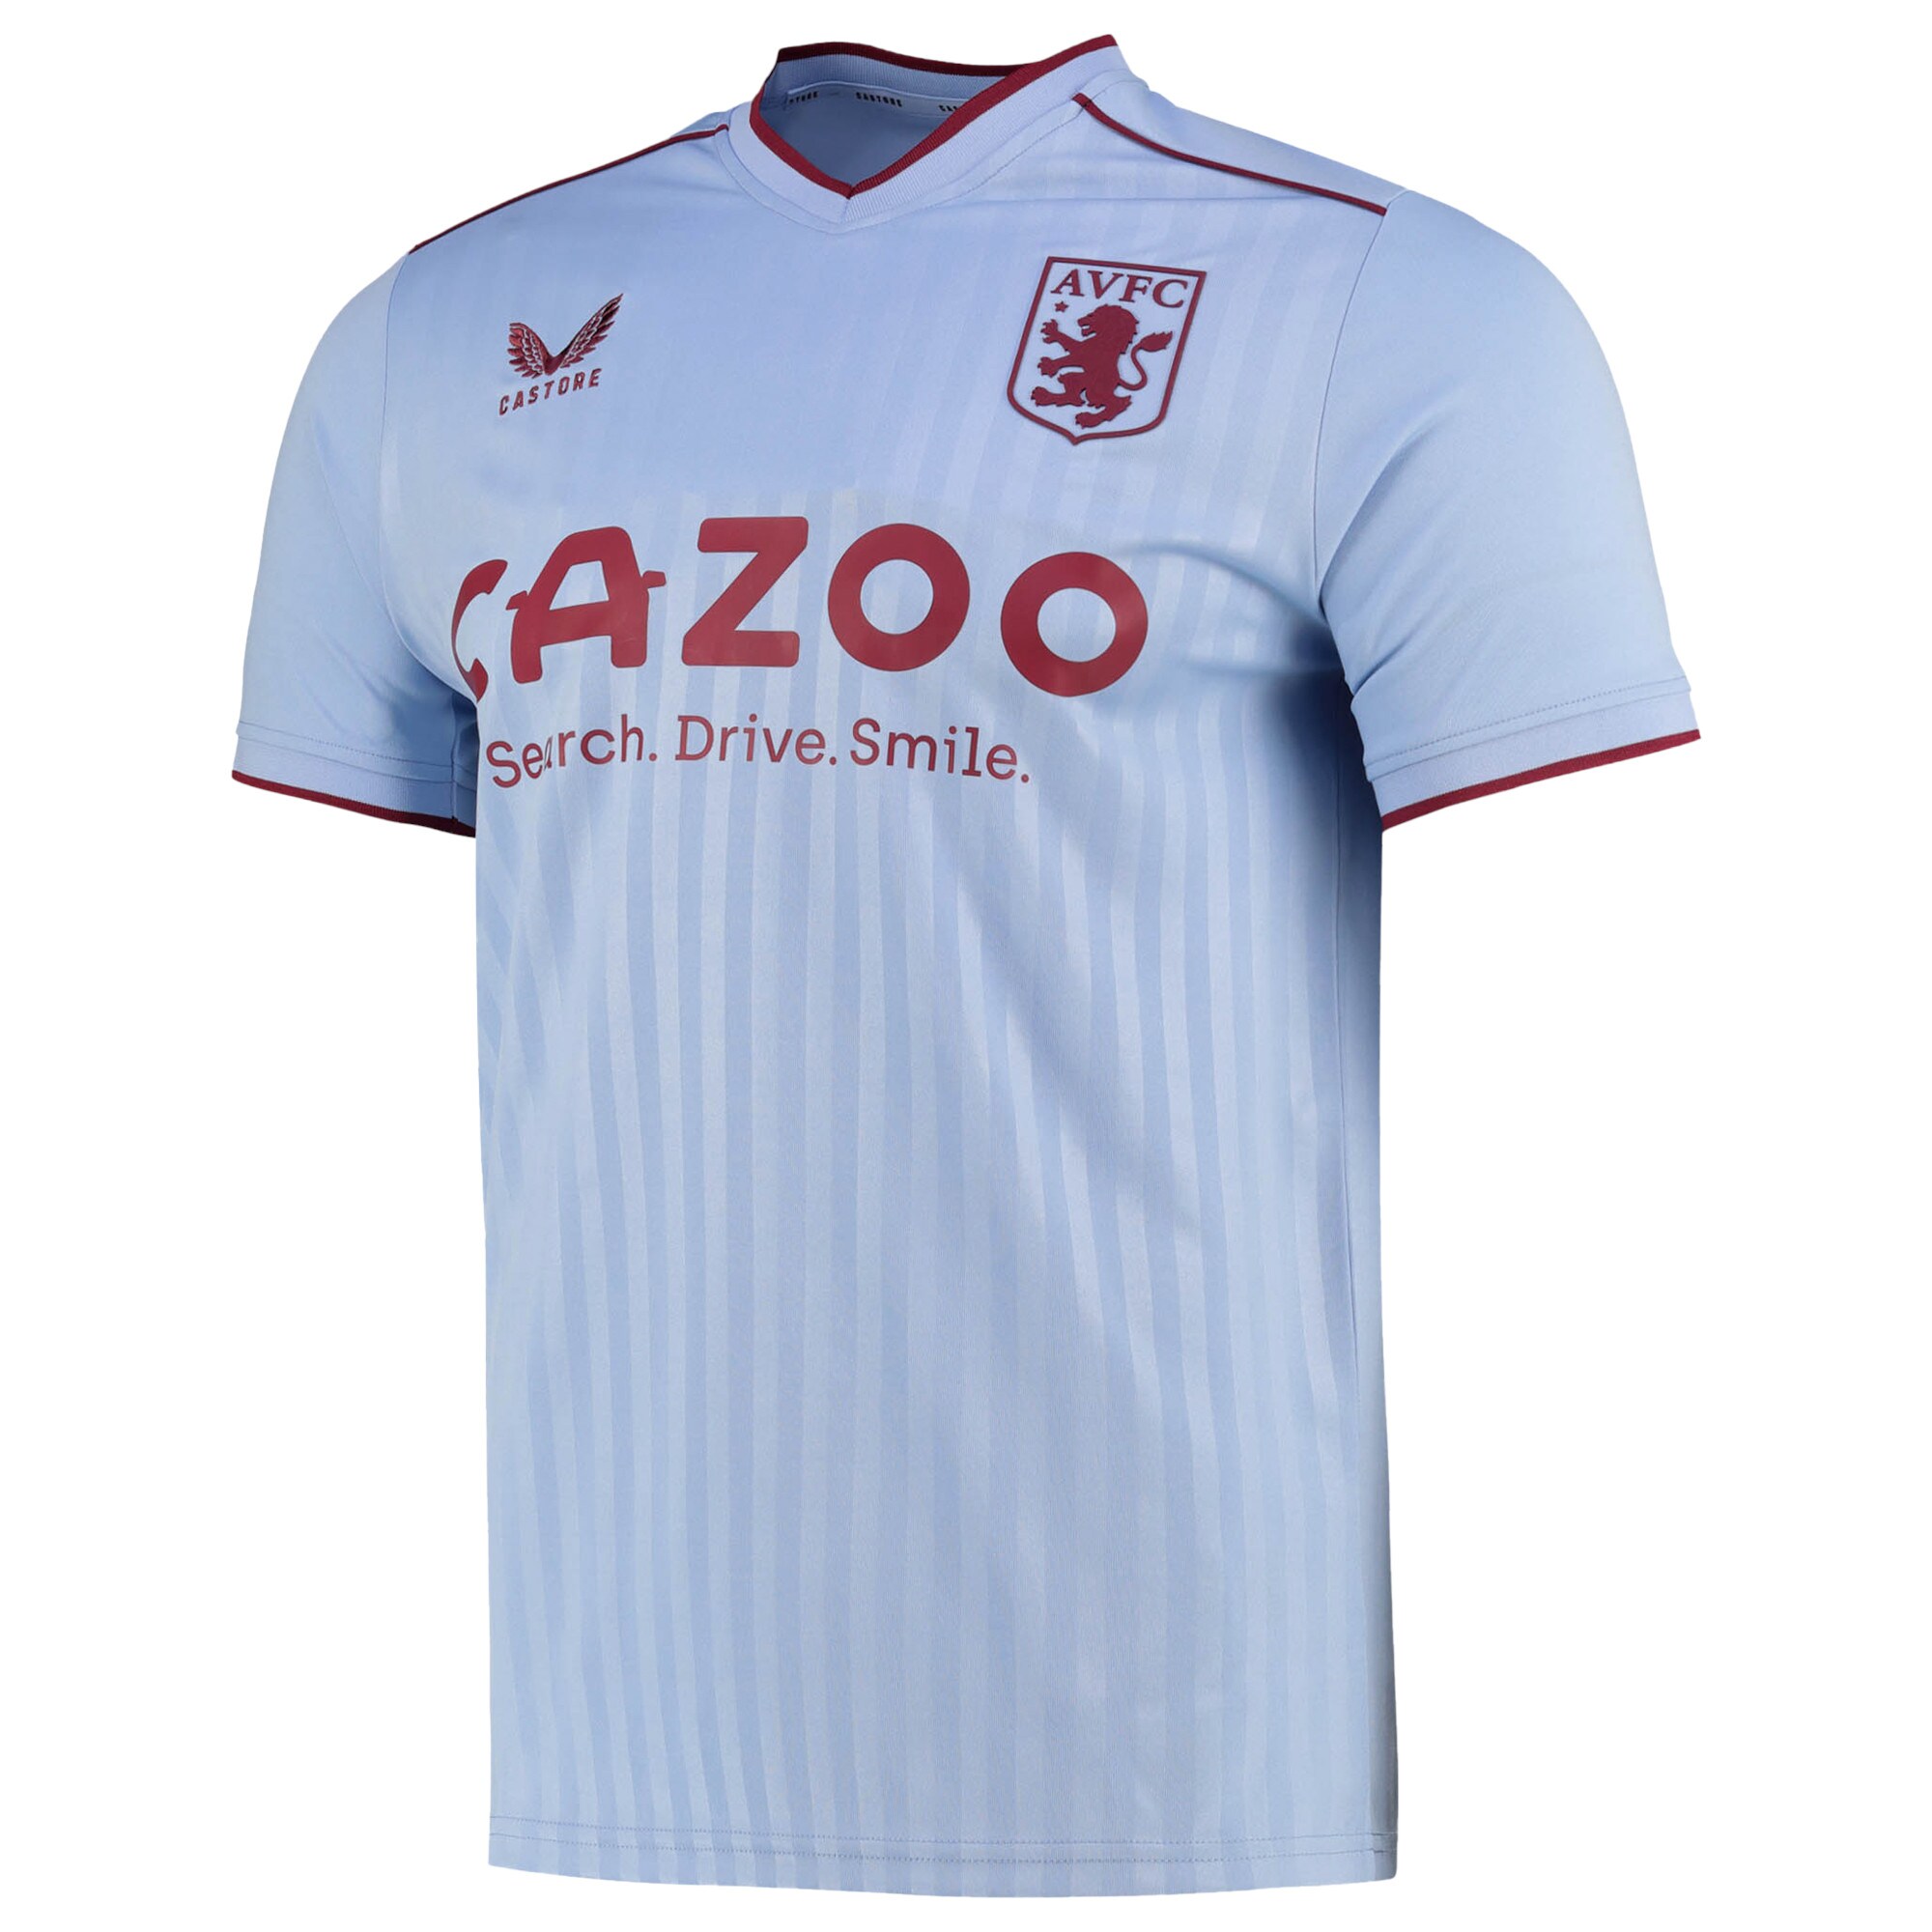 Aston Villa Away Shirt 2022-23 with Bailey 31 printing